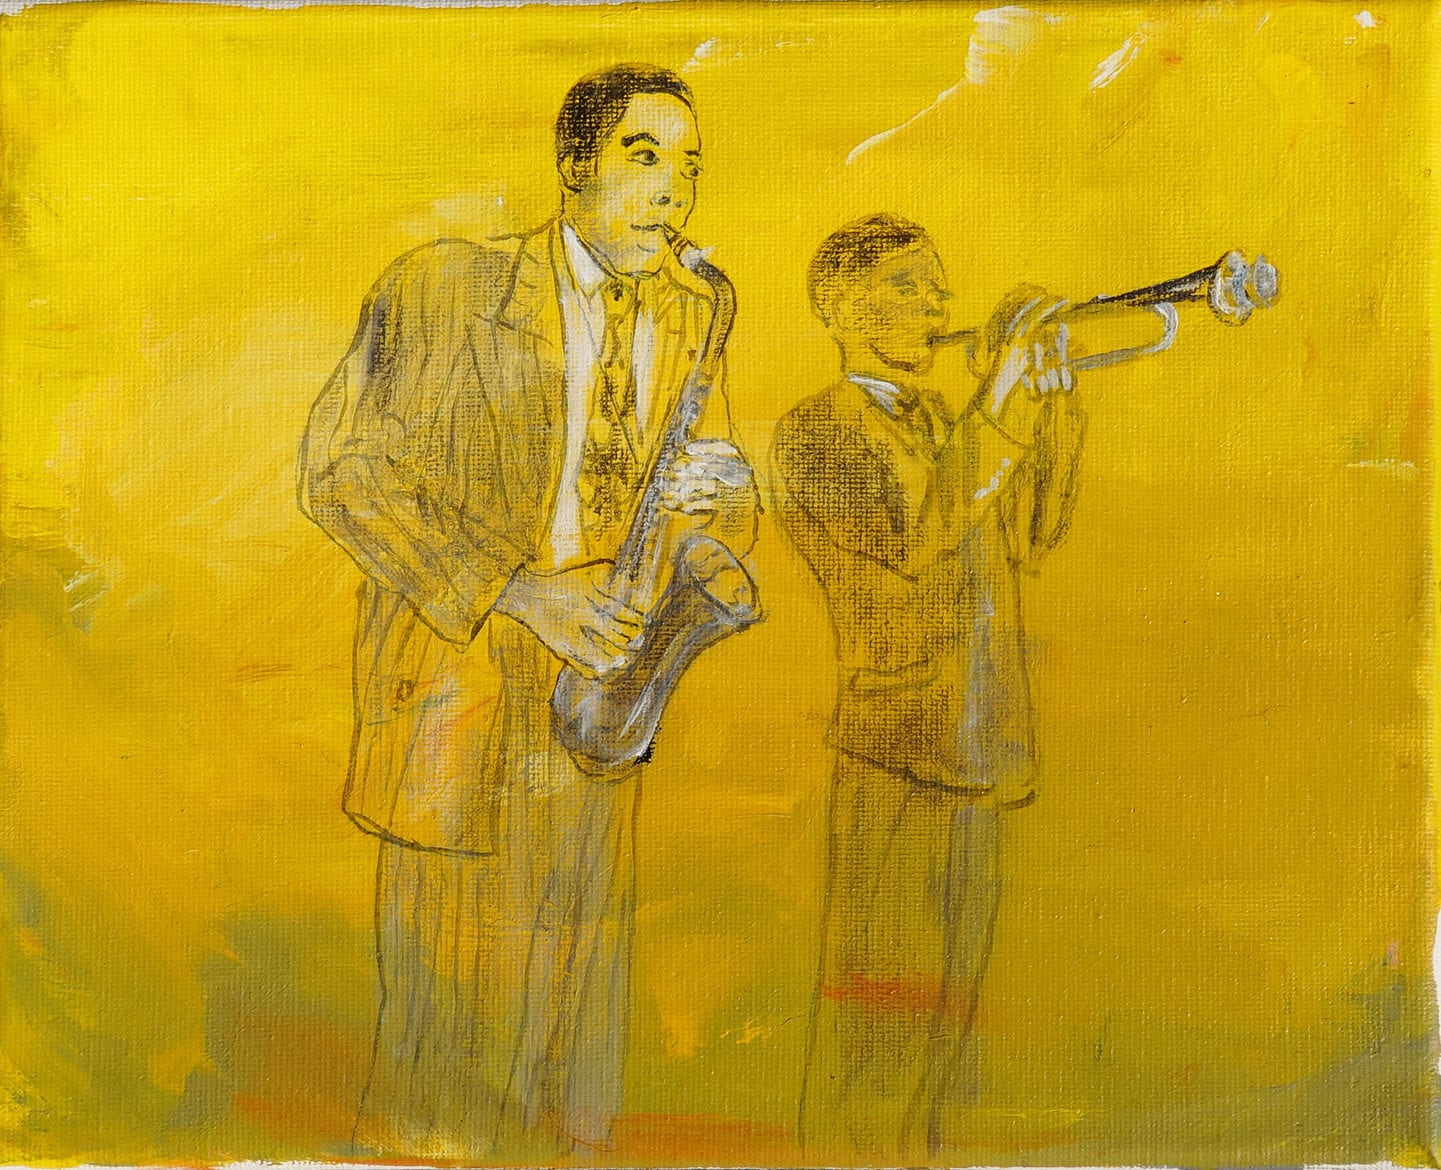 ‘Charlie Parker & Miles Davis’, 2020, acrylic on linen, 20 x 25 cm